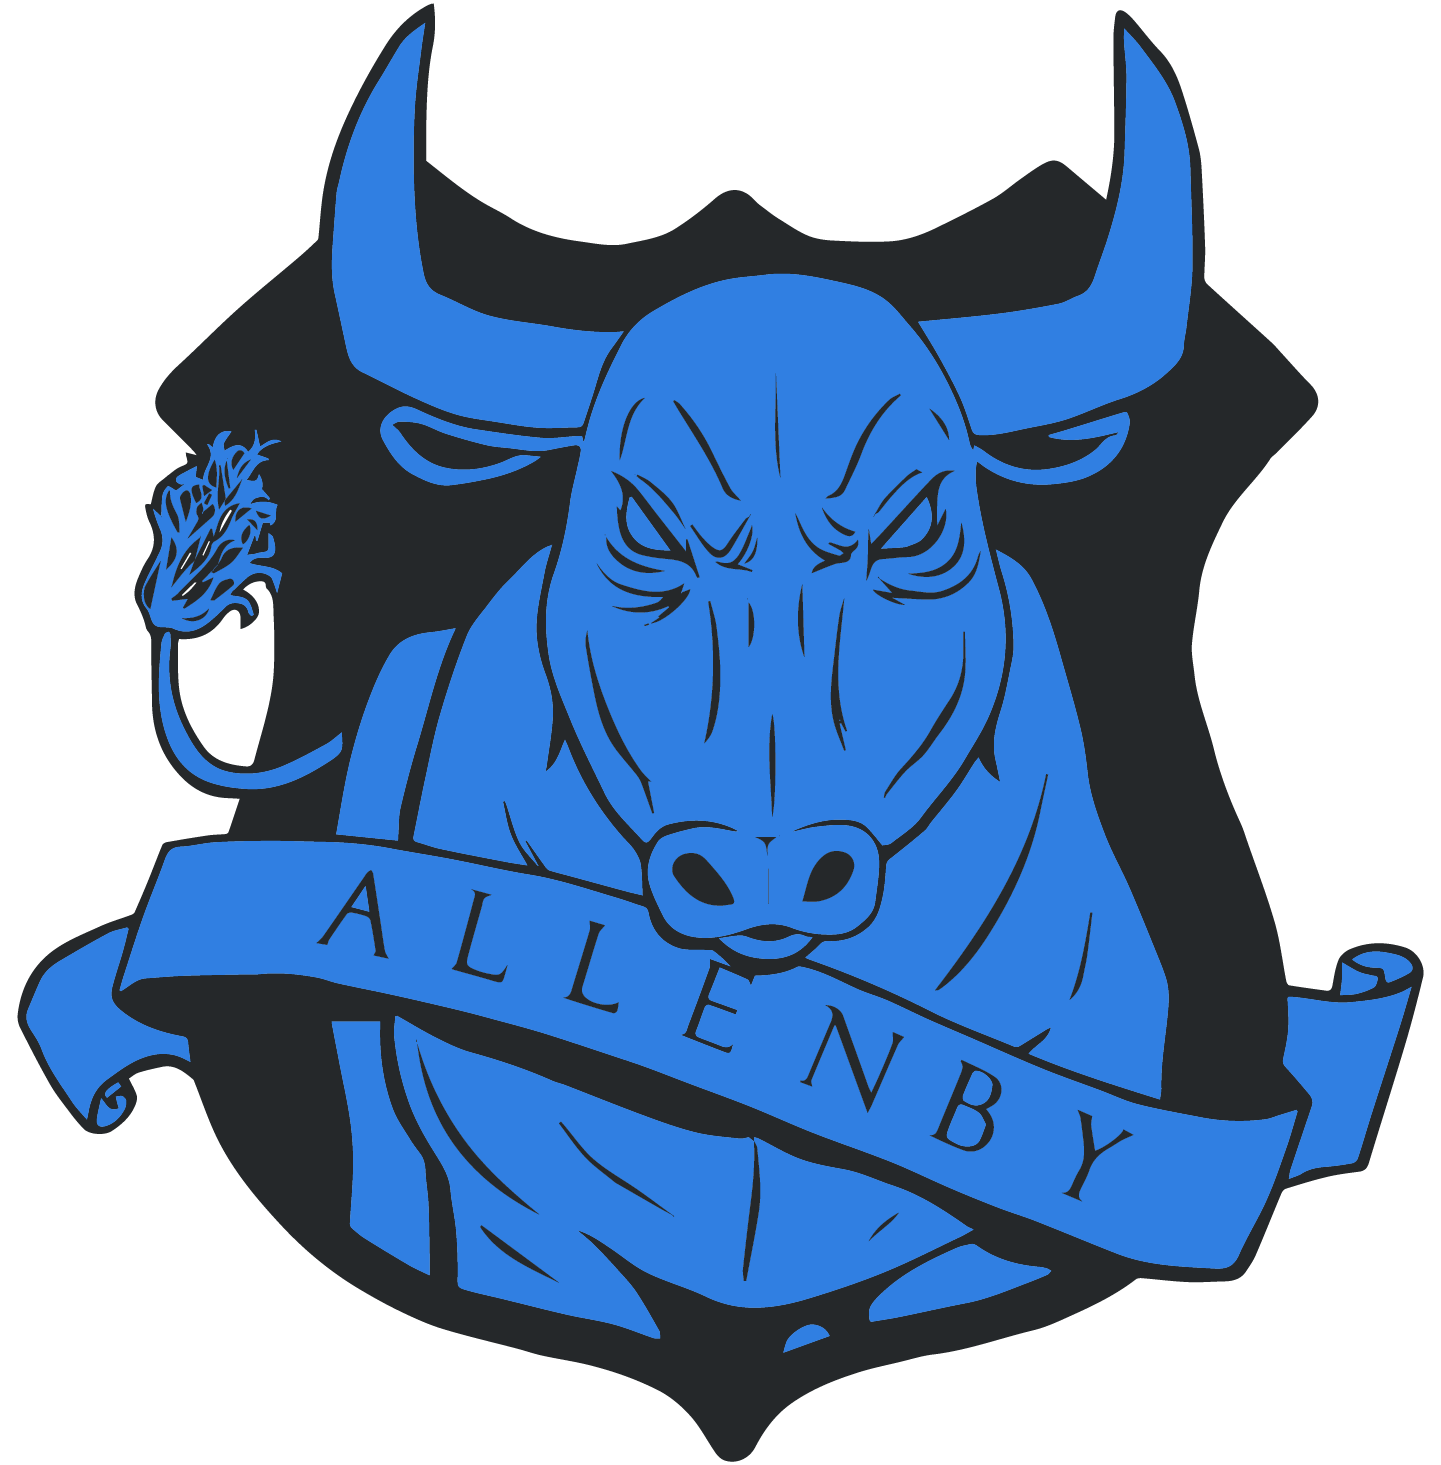 Allenby emblem